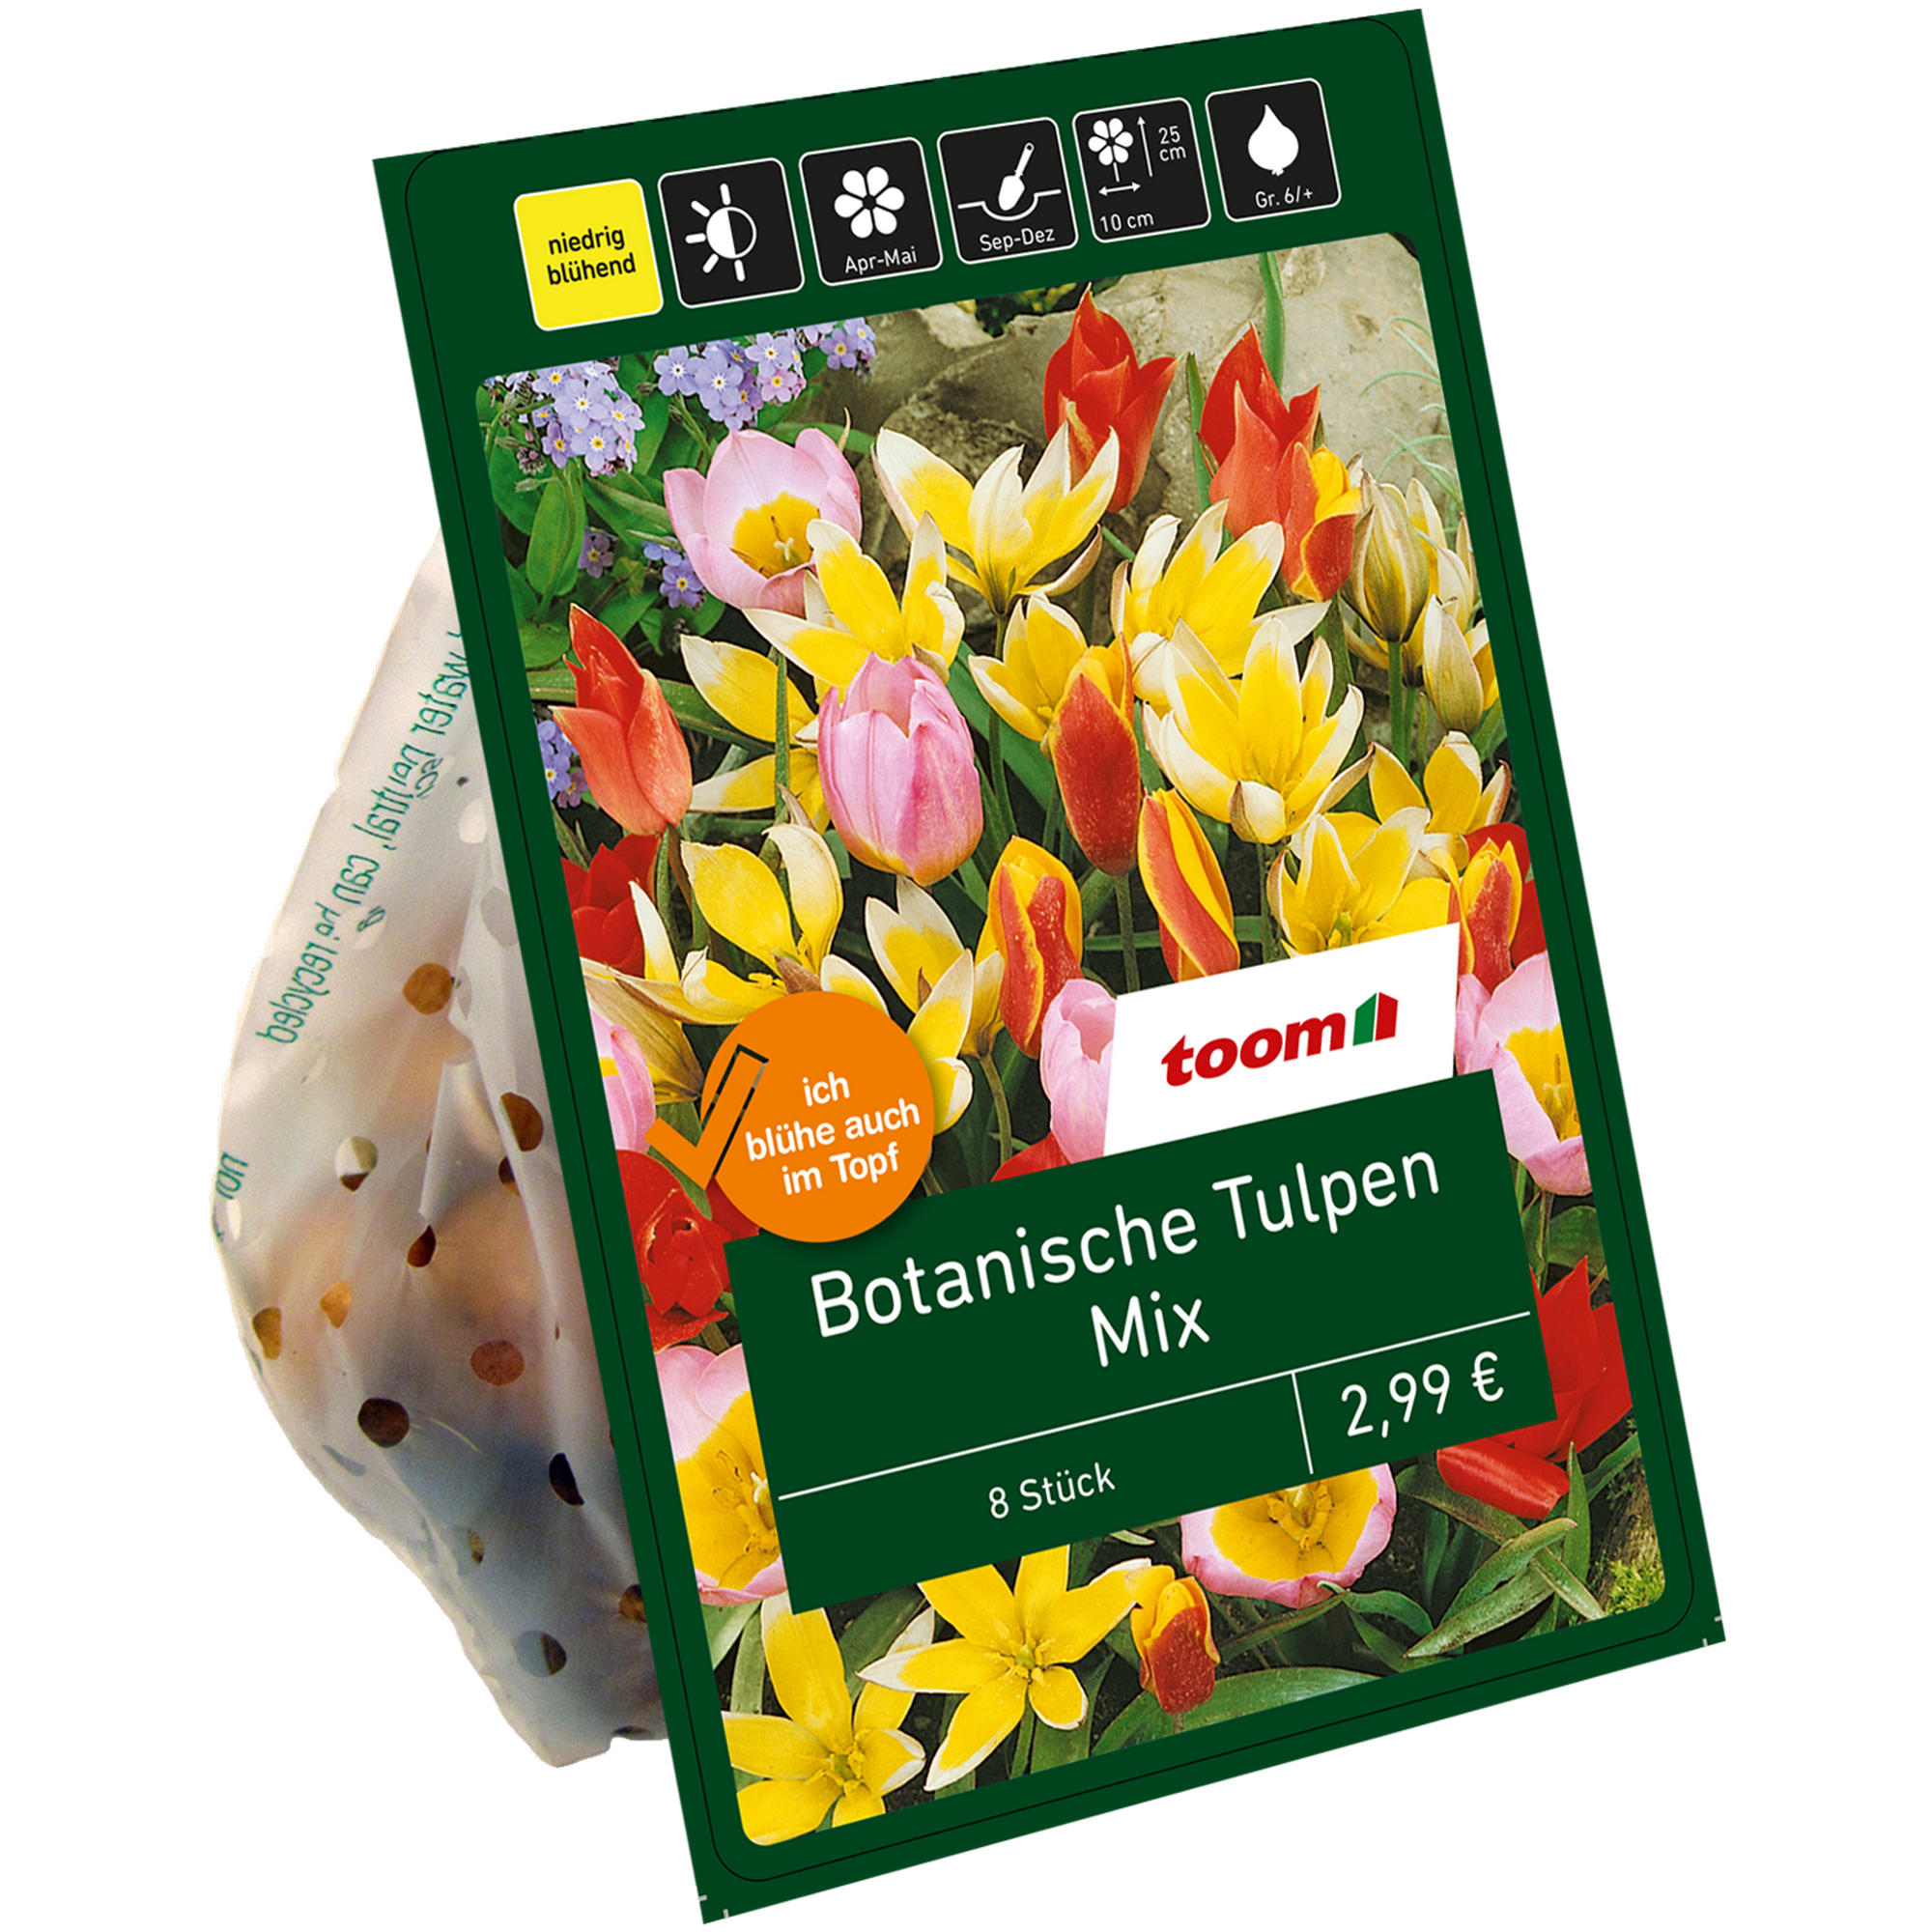 Botanische Tulpen 'Mix' 8 Zwiebeln + product picture